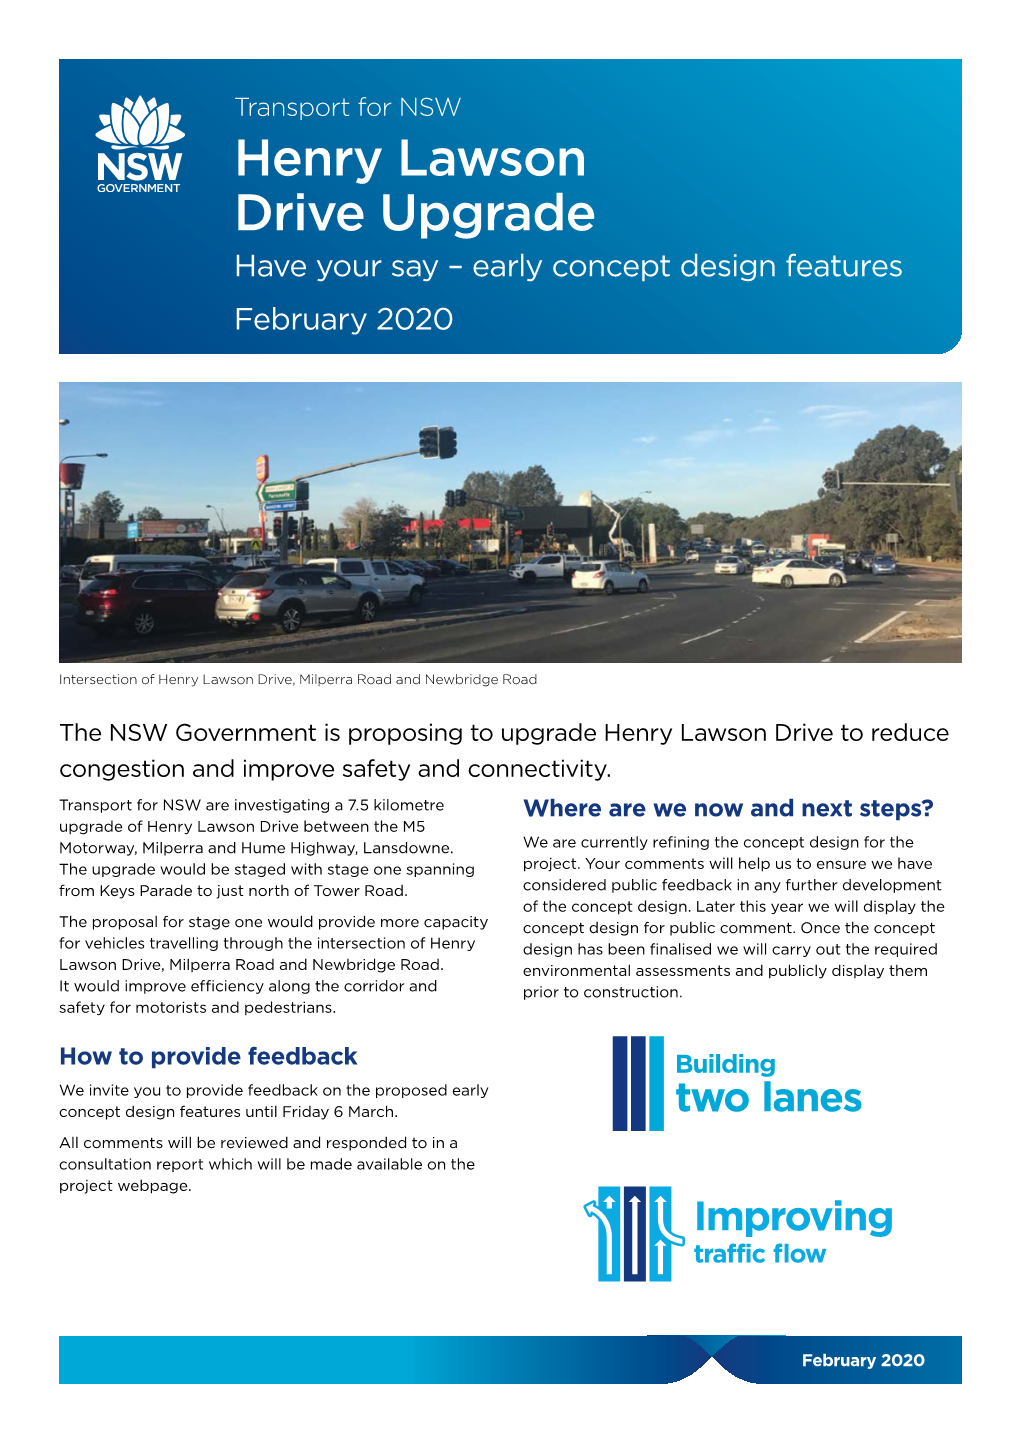 Henry Lawson Drive Upgrade Community Update February 2020